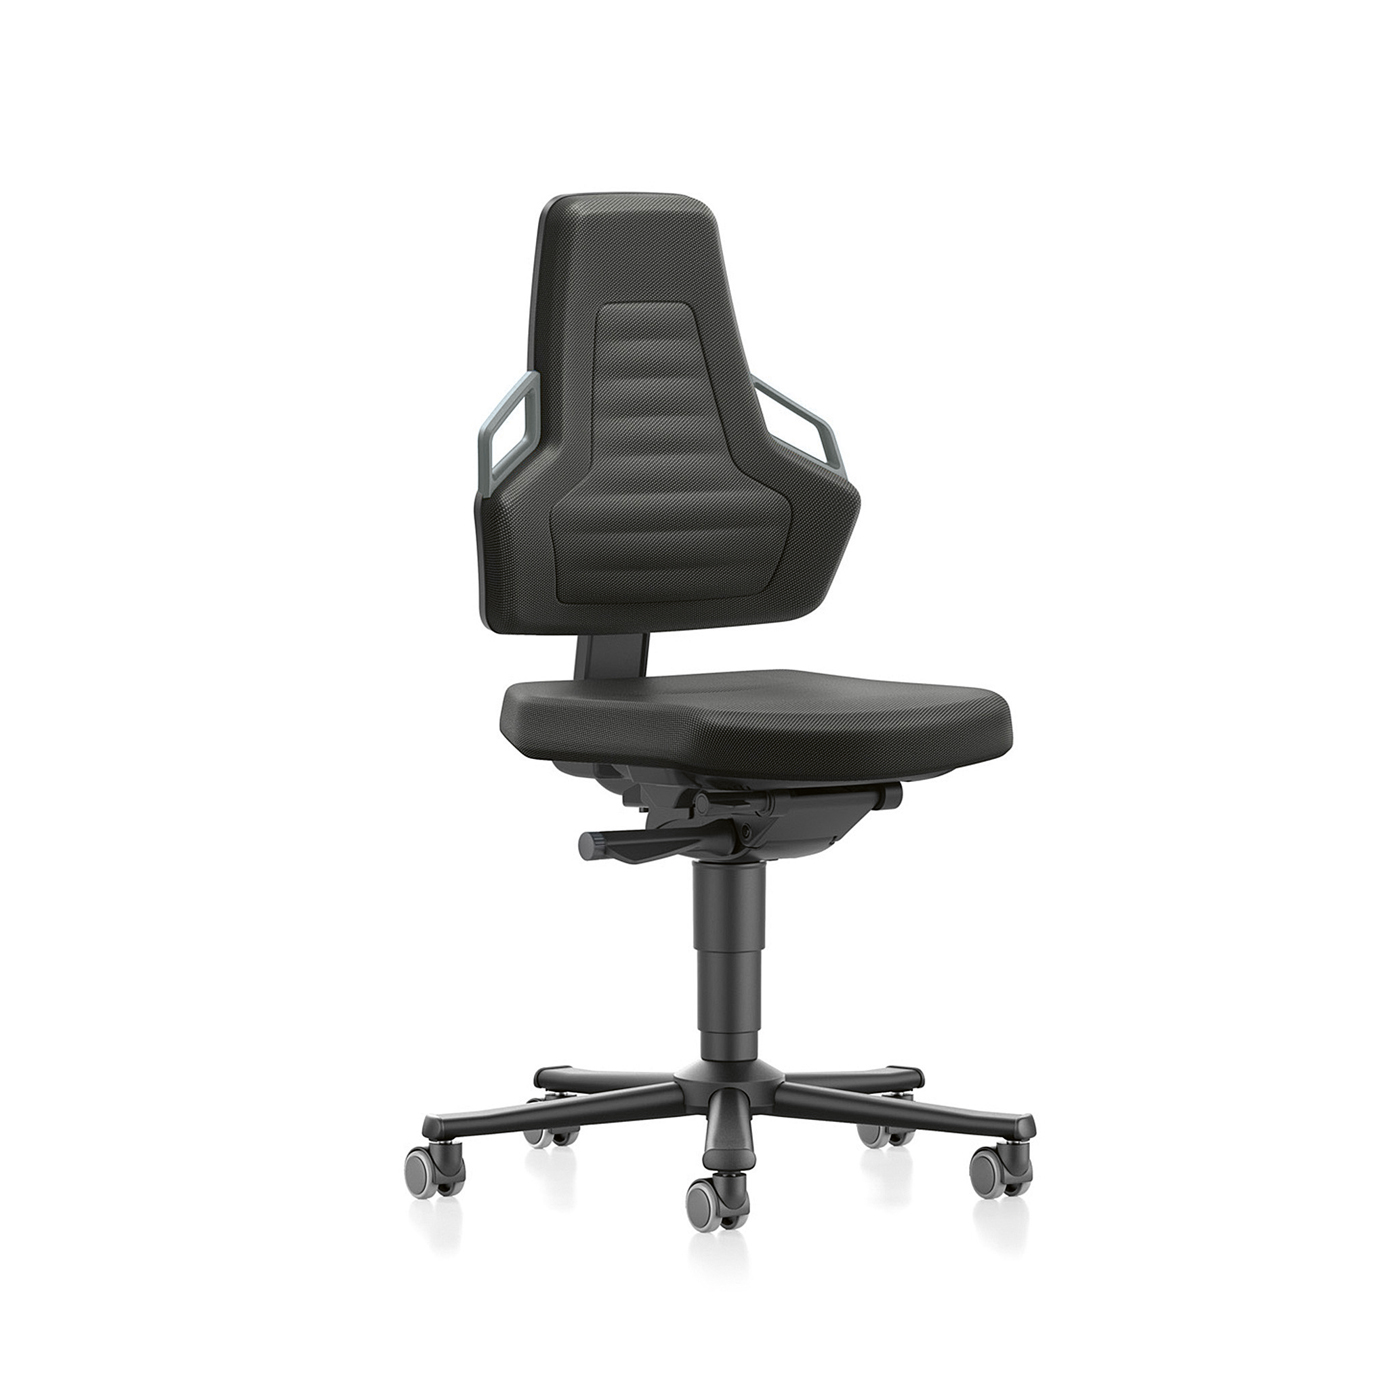 Nexxit 2 Swivel Chair, Fabric Duotec Black/Anthrazite - 1 piece